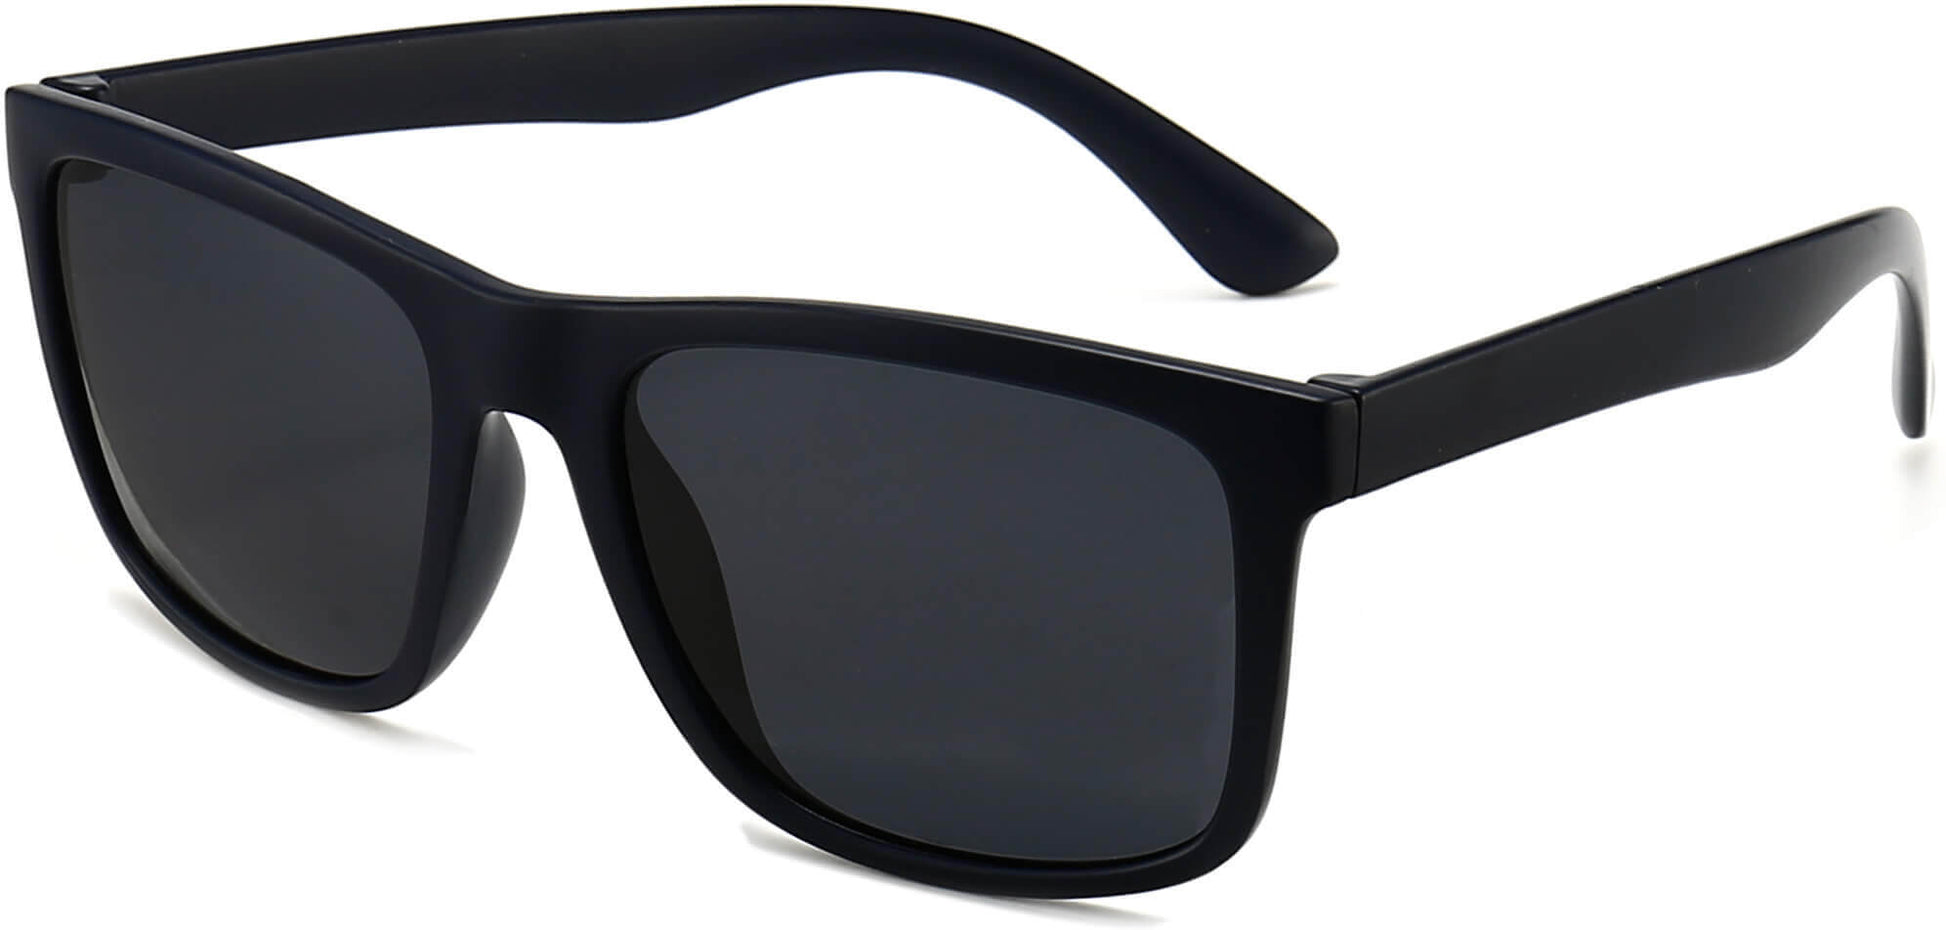 Zion Blue Plastic Sunglasses from ANRRI, angle view